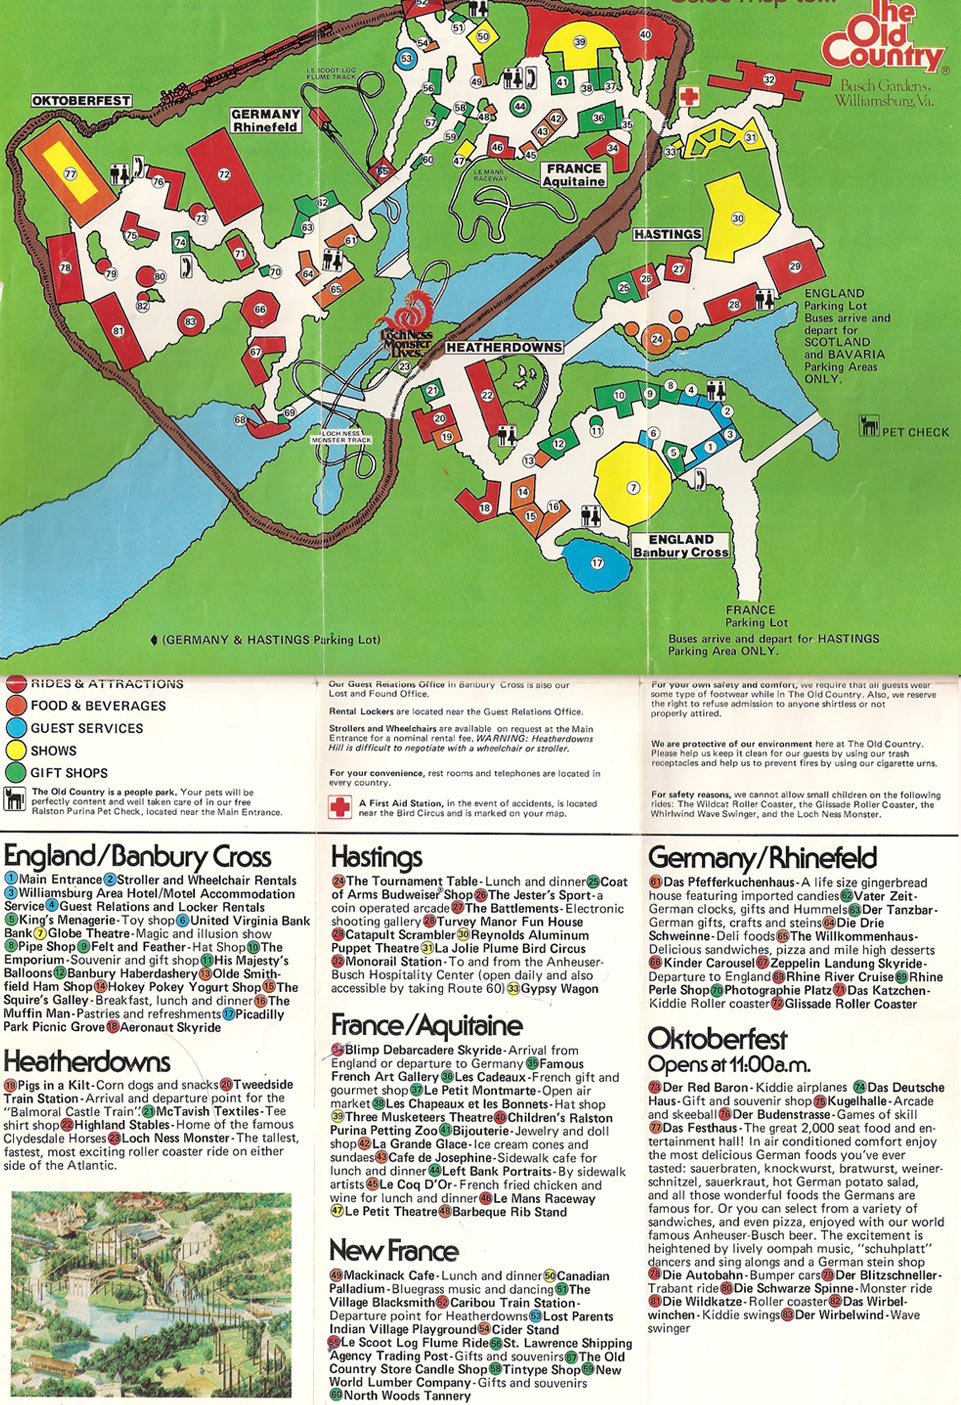 Theme Park Brochures Busch Gardens The Old Country Theme Park